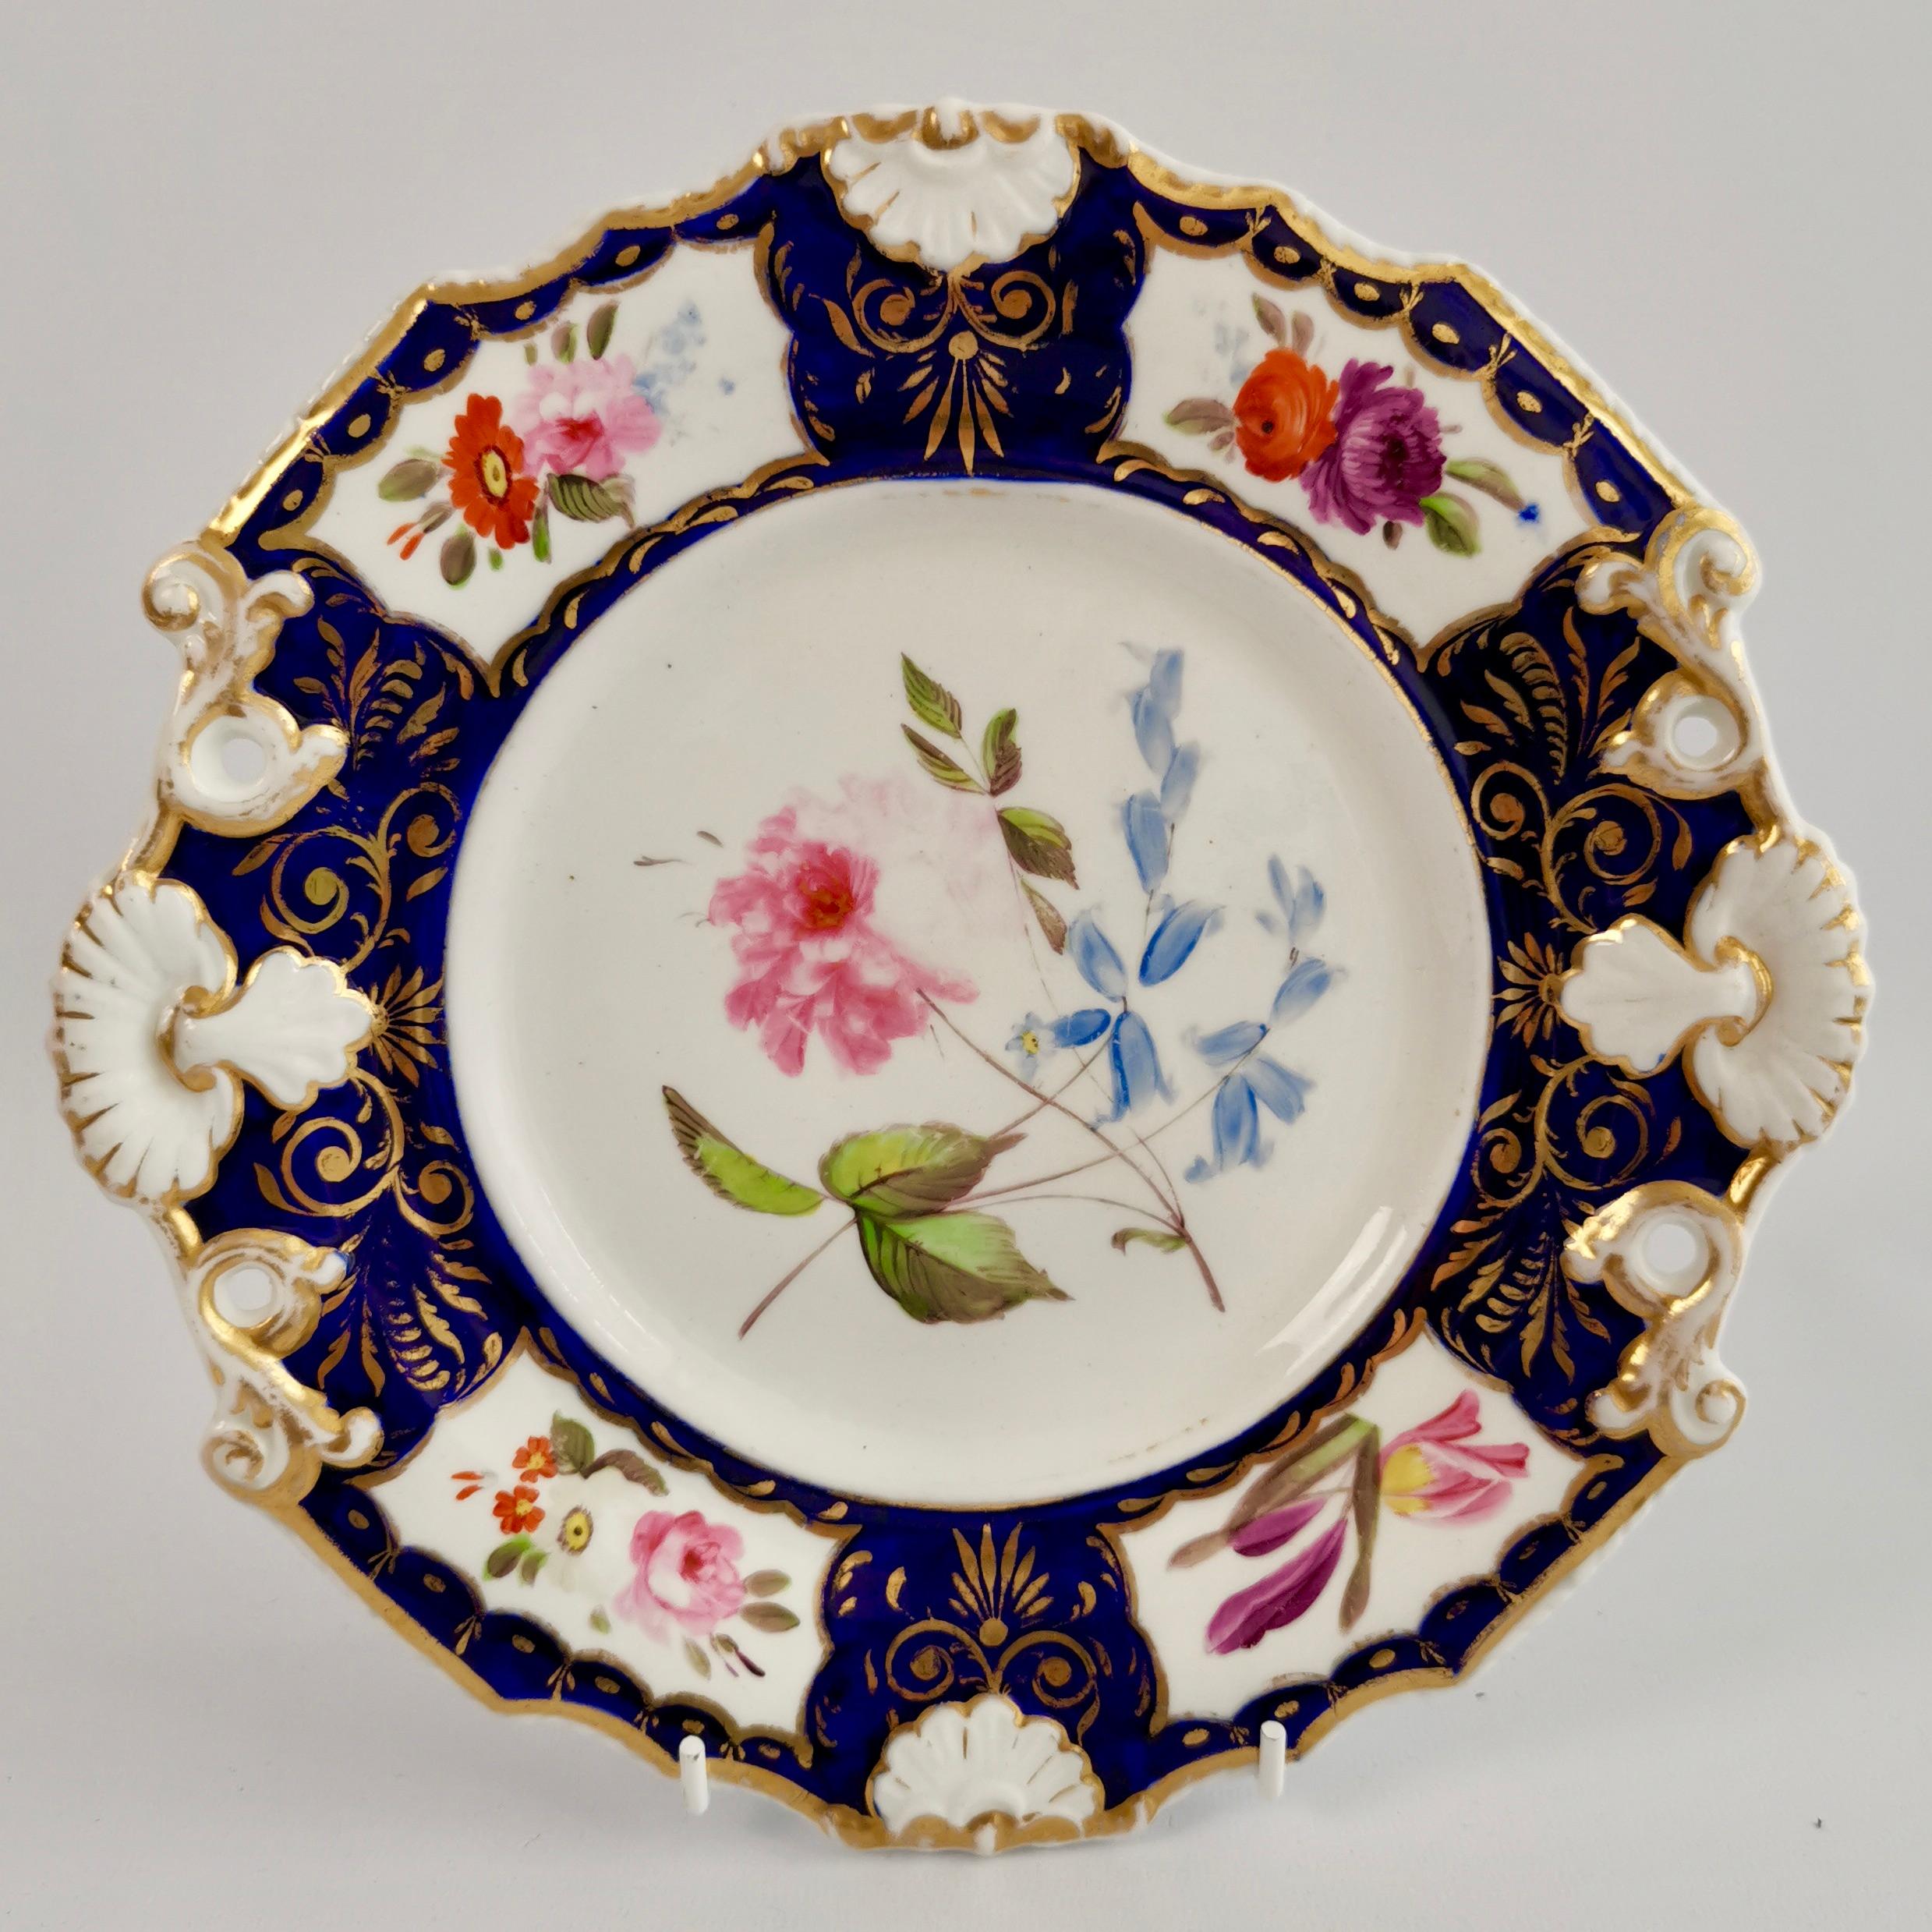 New Hall Porcelain Part Dessert Service, Cobalt Blue, Flowers, Regency 1824-1830 3